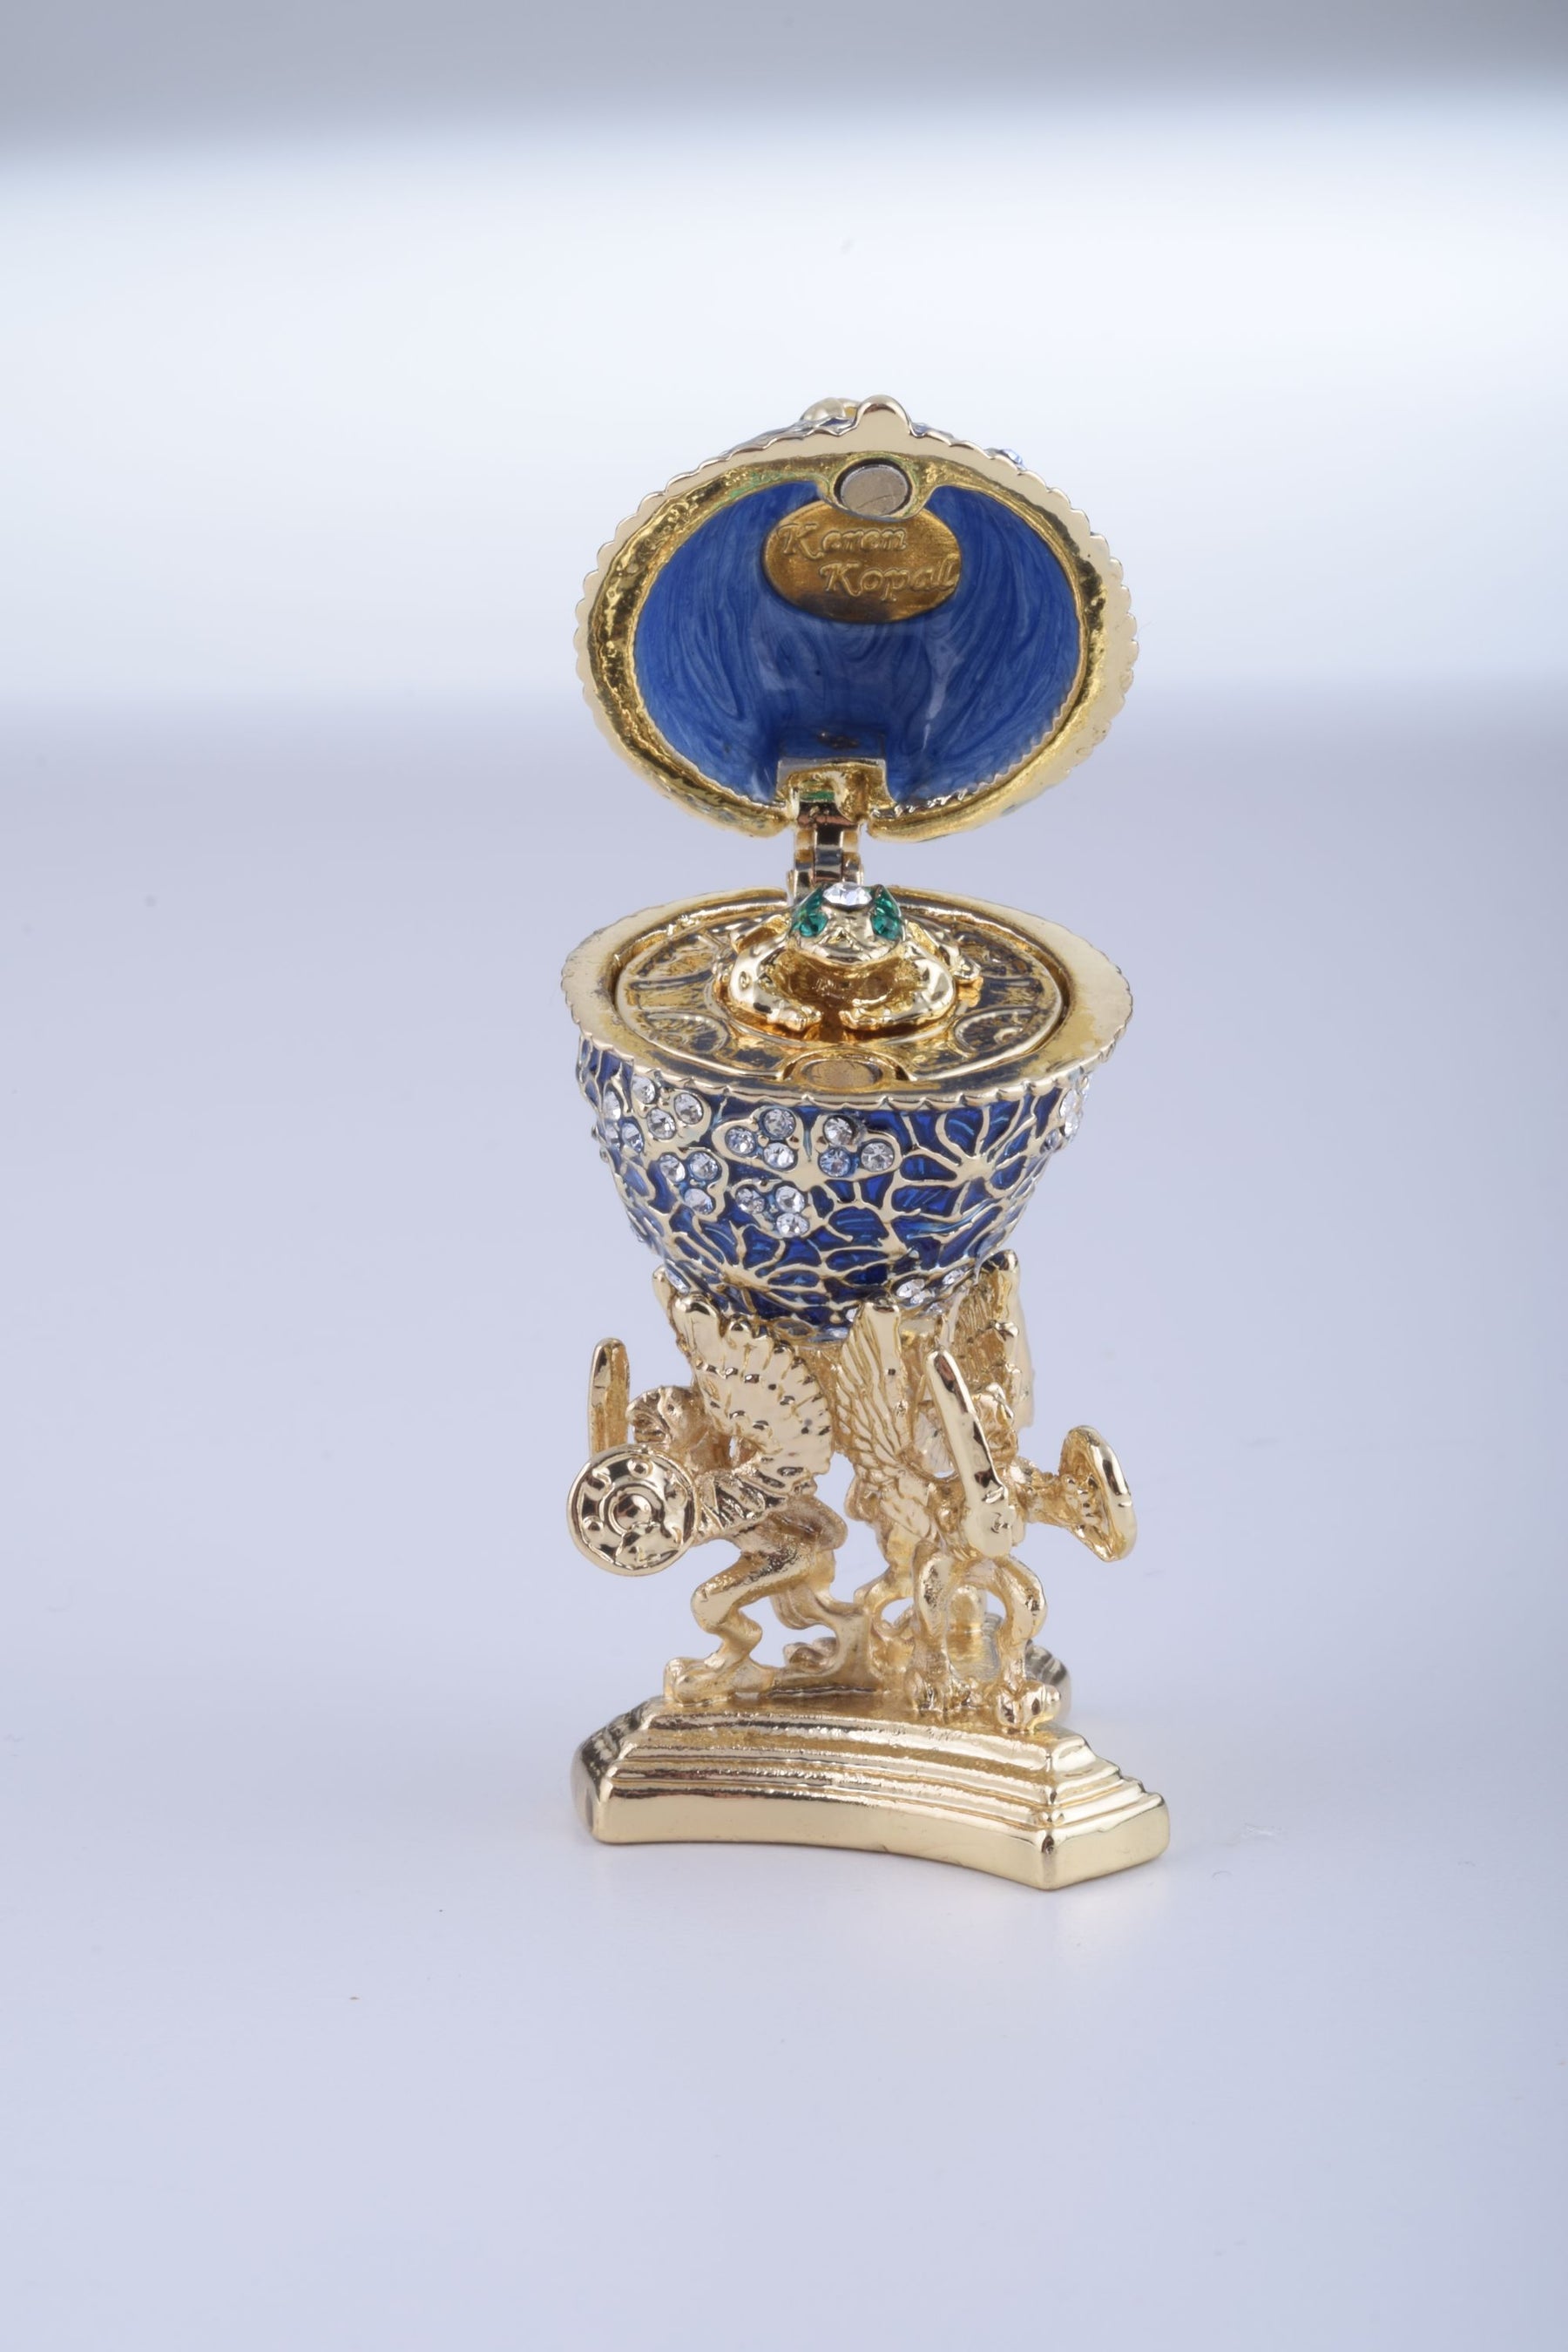 Blue Faberge Egg with a Golden Frog Inside